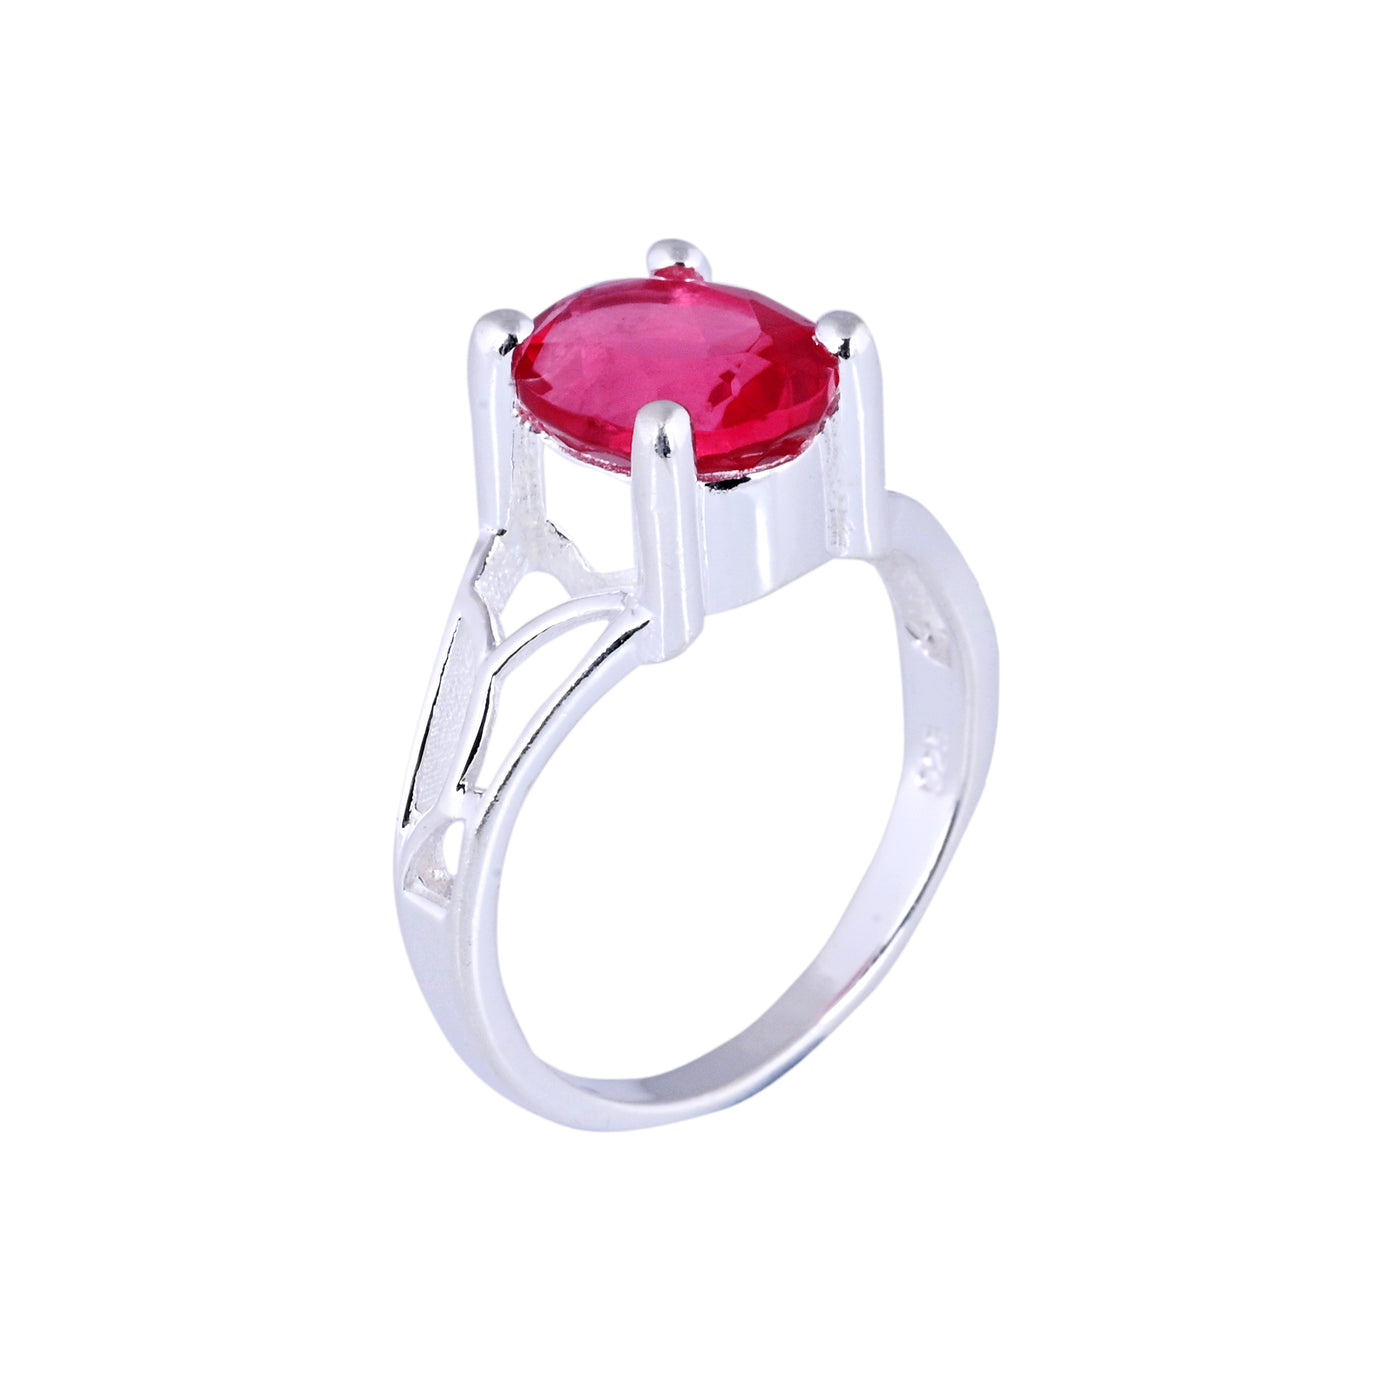 Spinel Gemstone Engagement Ring